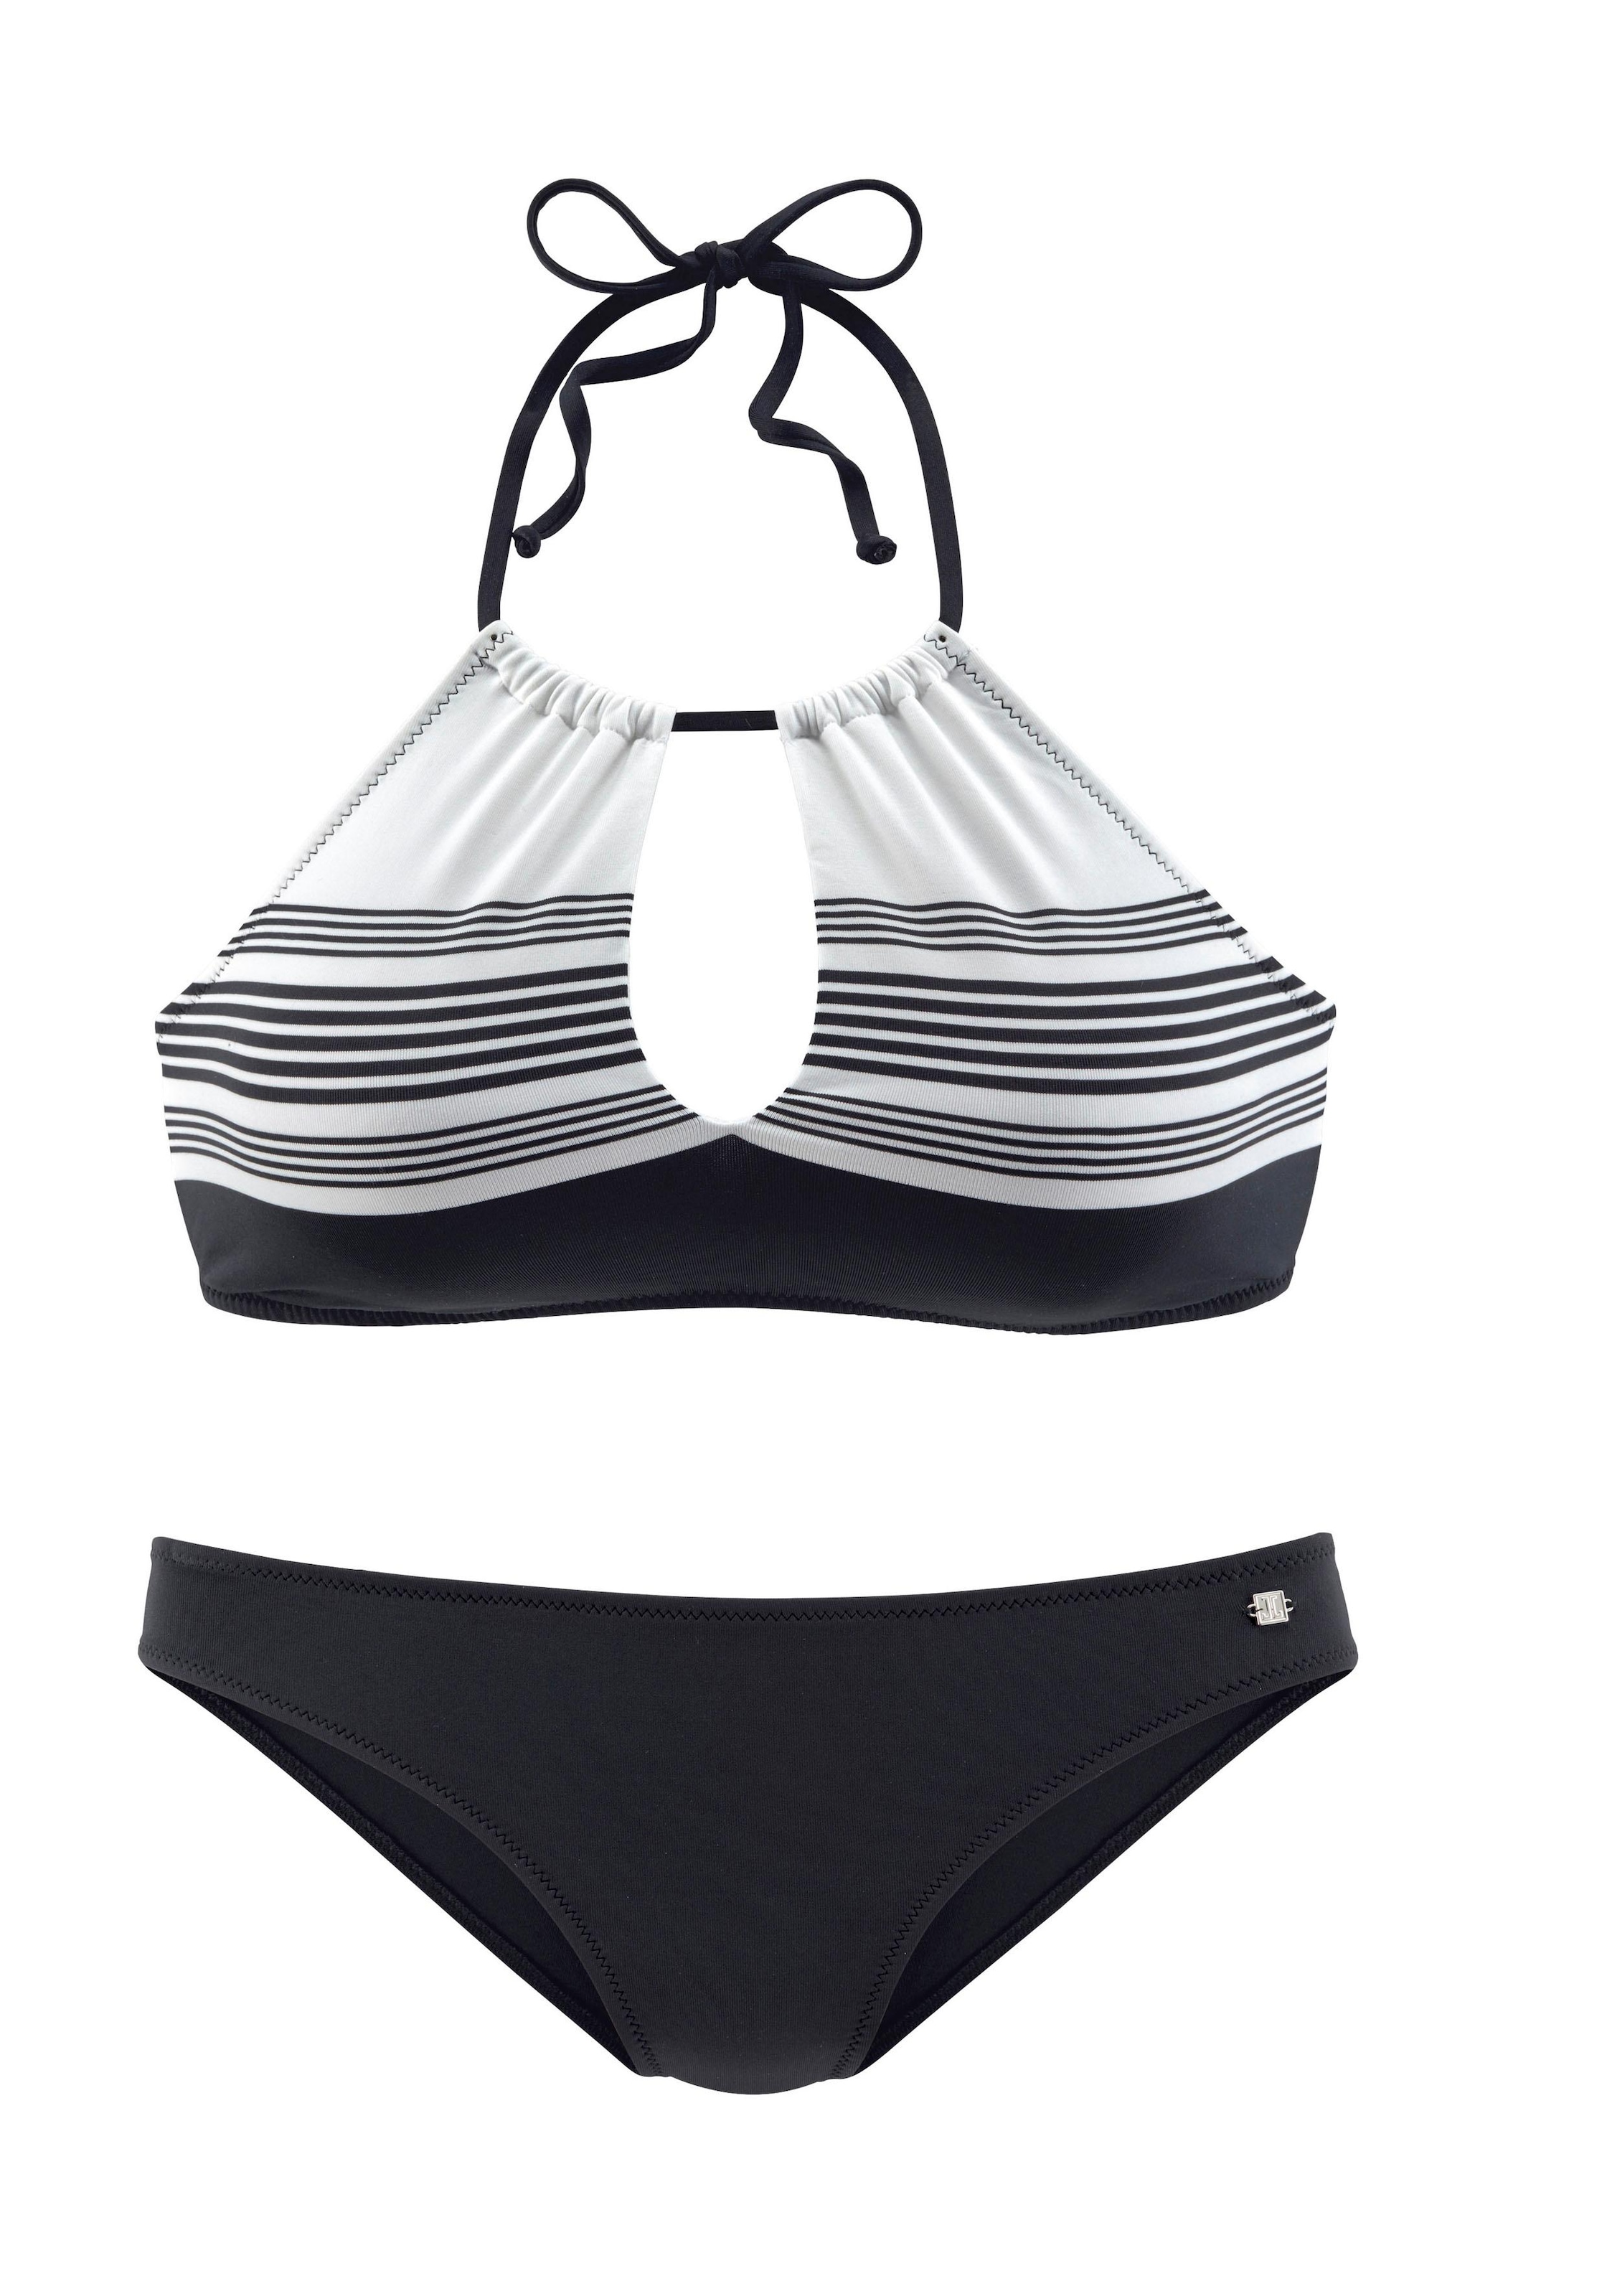 | Bustier-Bikini Bustier-Bikinis kaufen jetzt online bei LASCANA